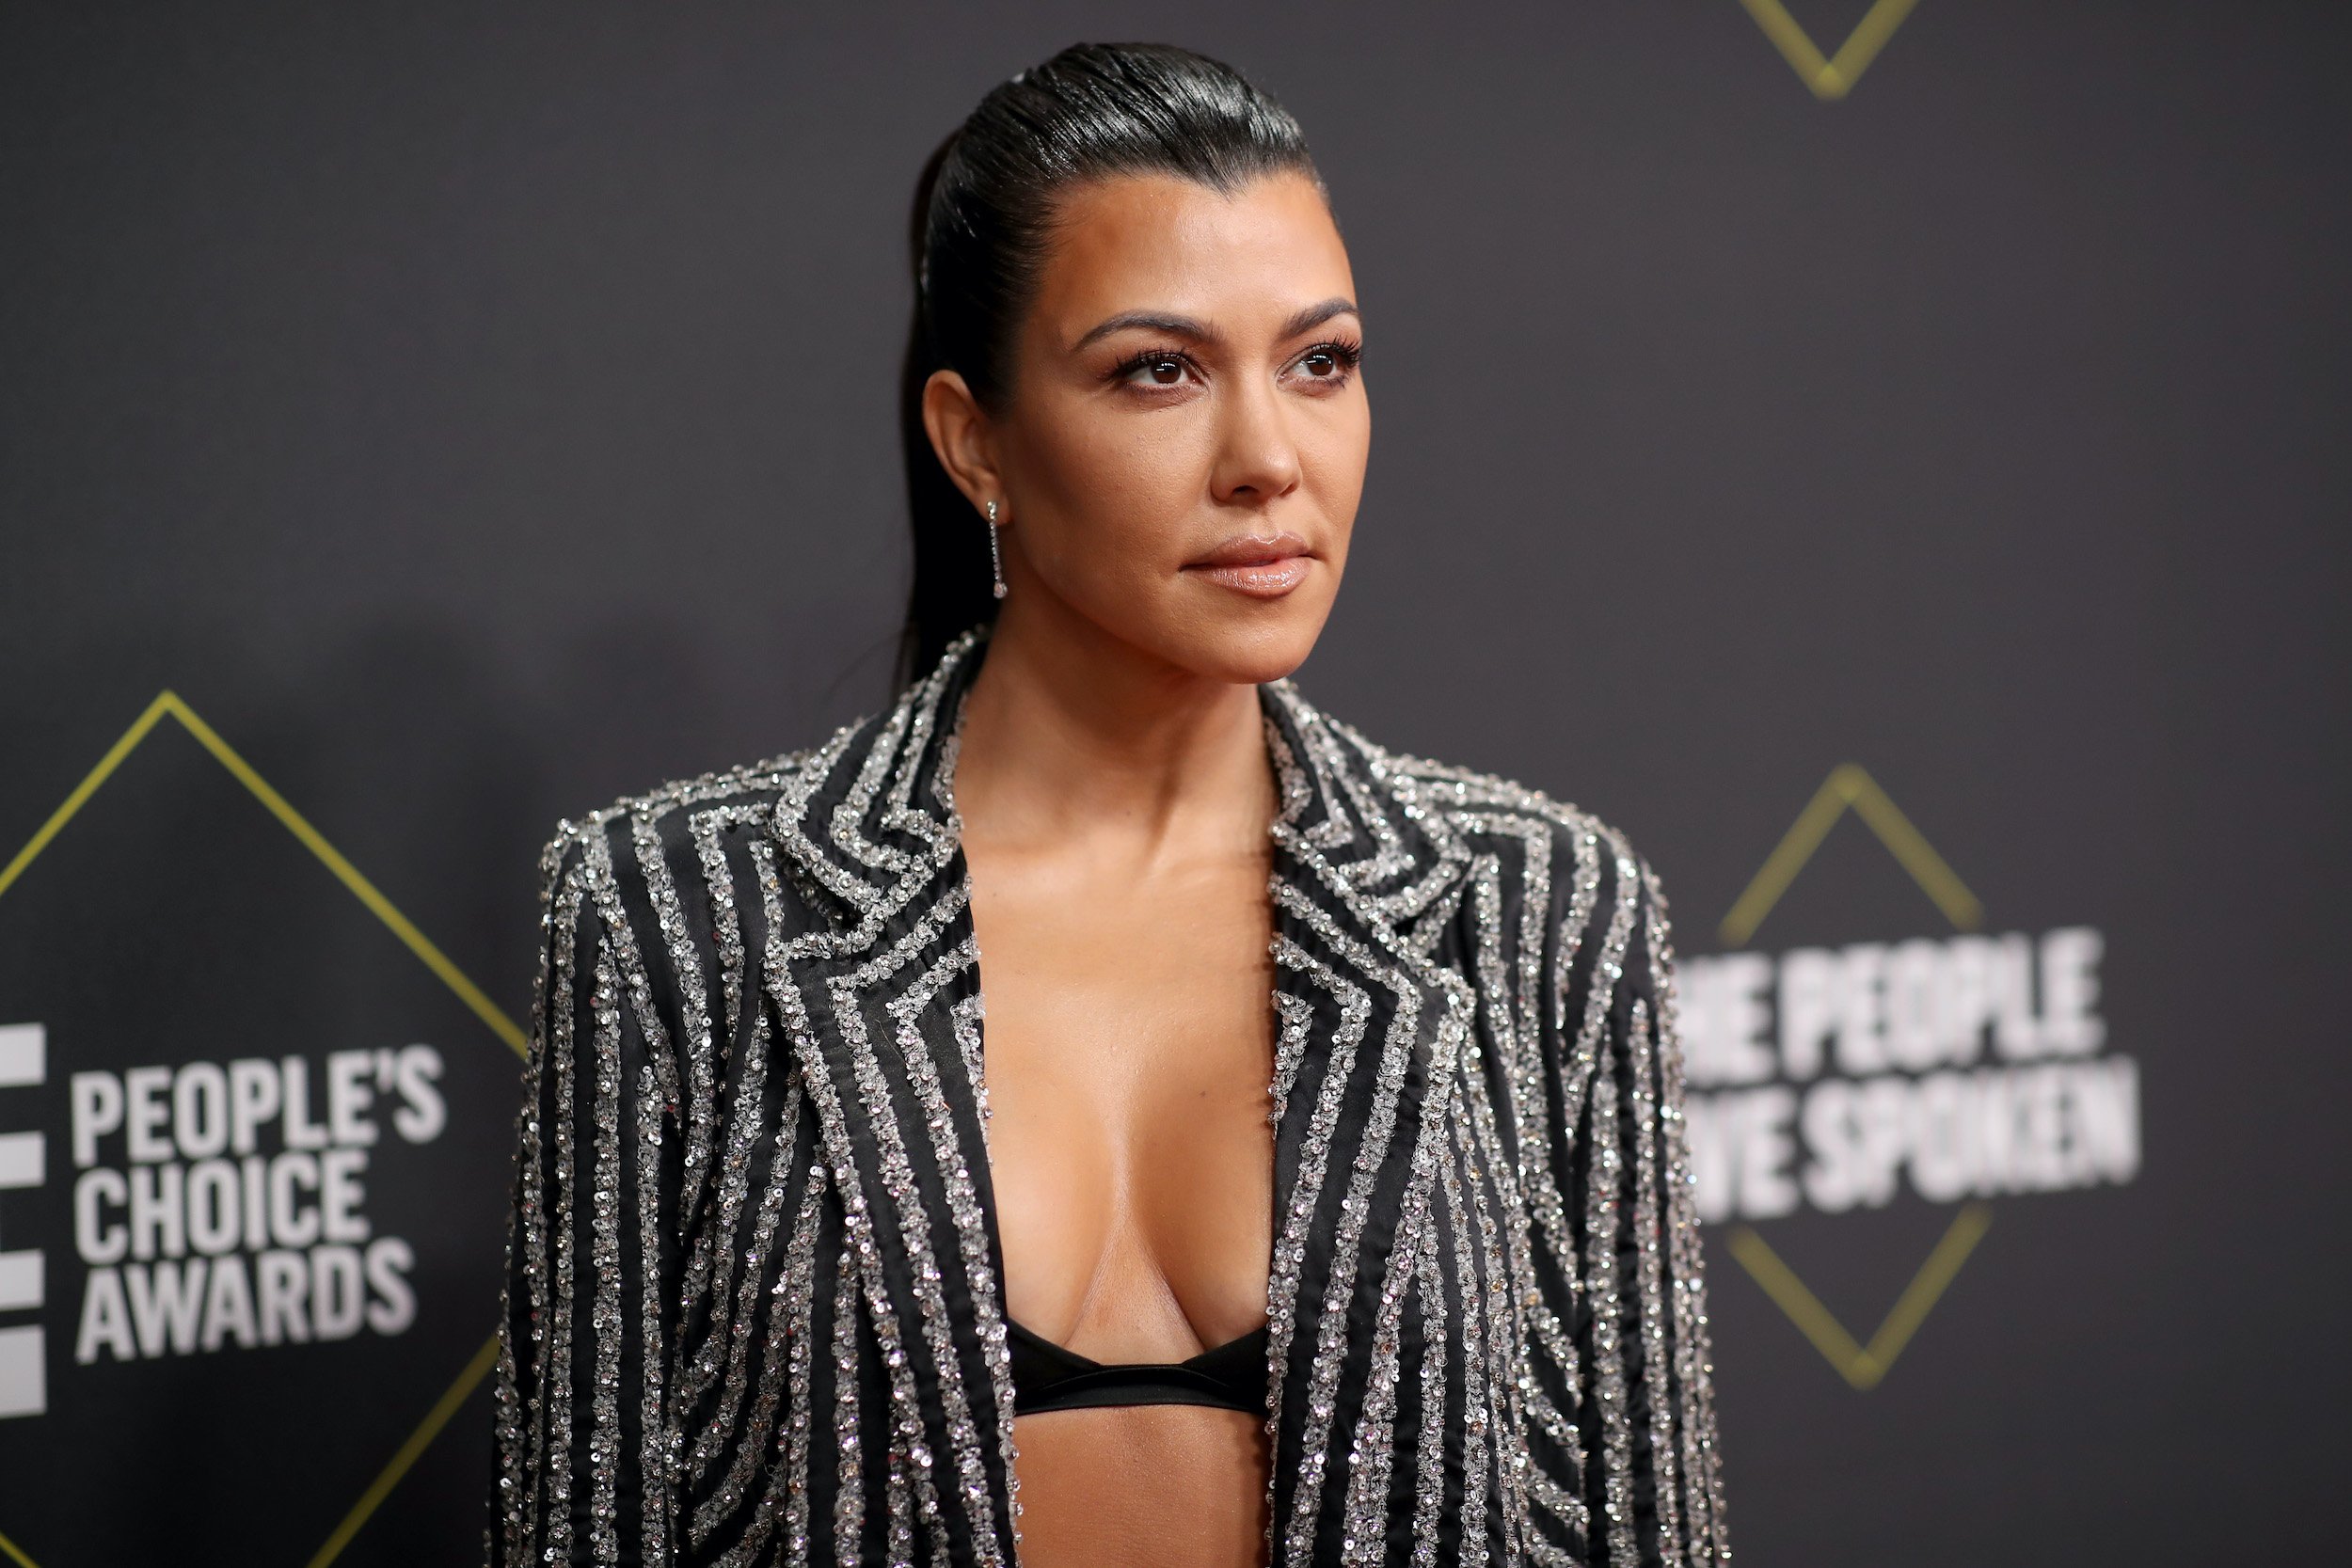 Kourtney Kardashian arrives to the 2019 E! People's Choice Awards held at the Barker Hangar on November 10, 2019.